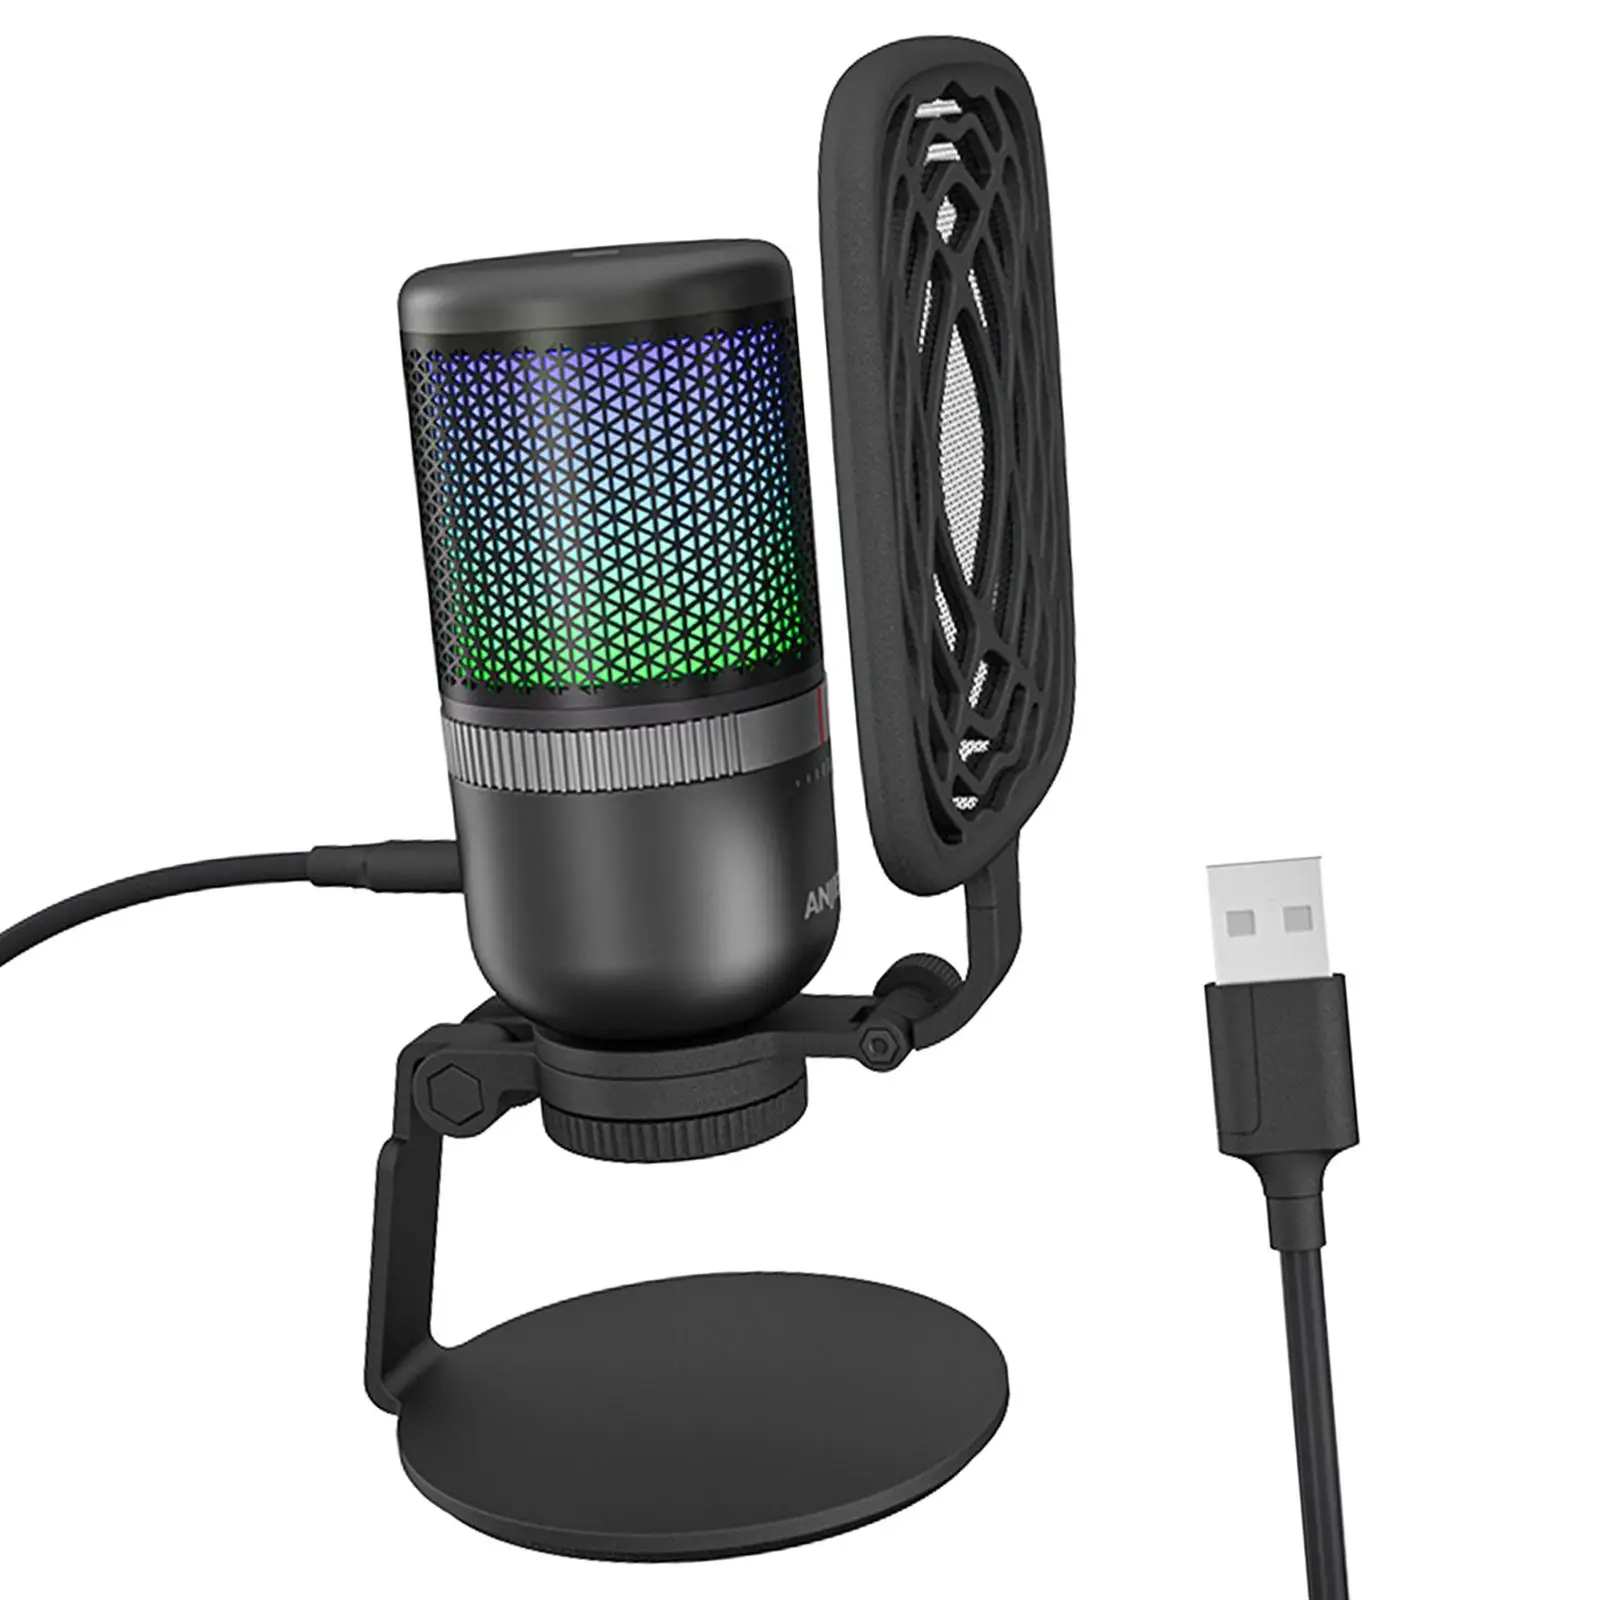 USB Microphone 90 degree Adjustable Tilt Angle Sound Control Colorful RGB Light Plug and Play Studio and Computer Condenser Mic